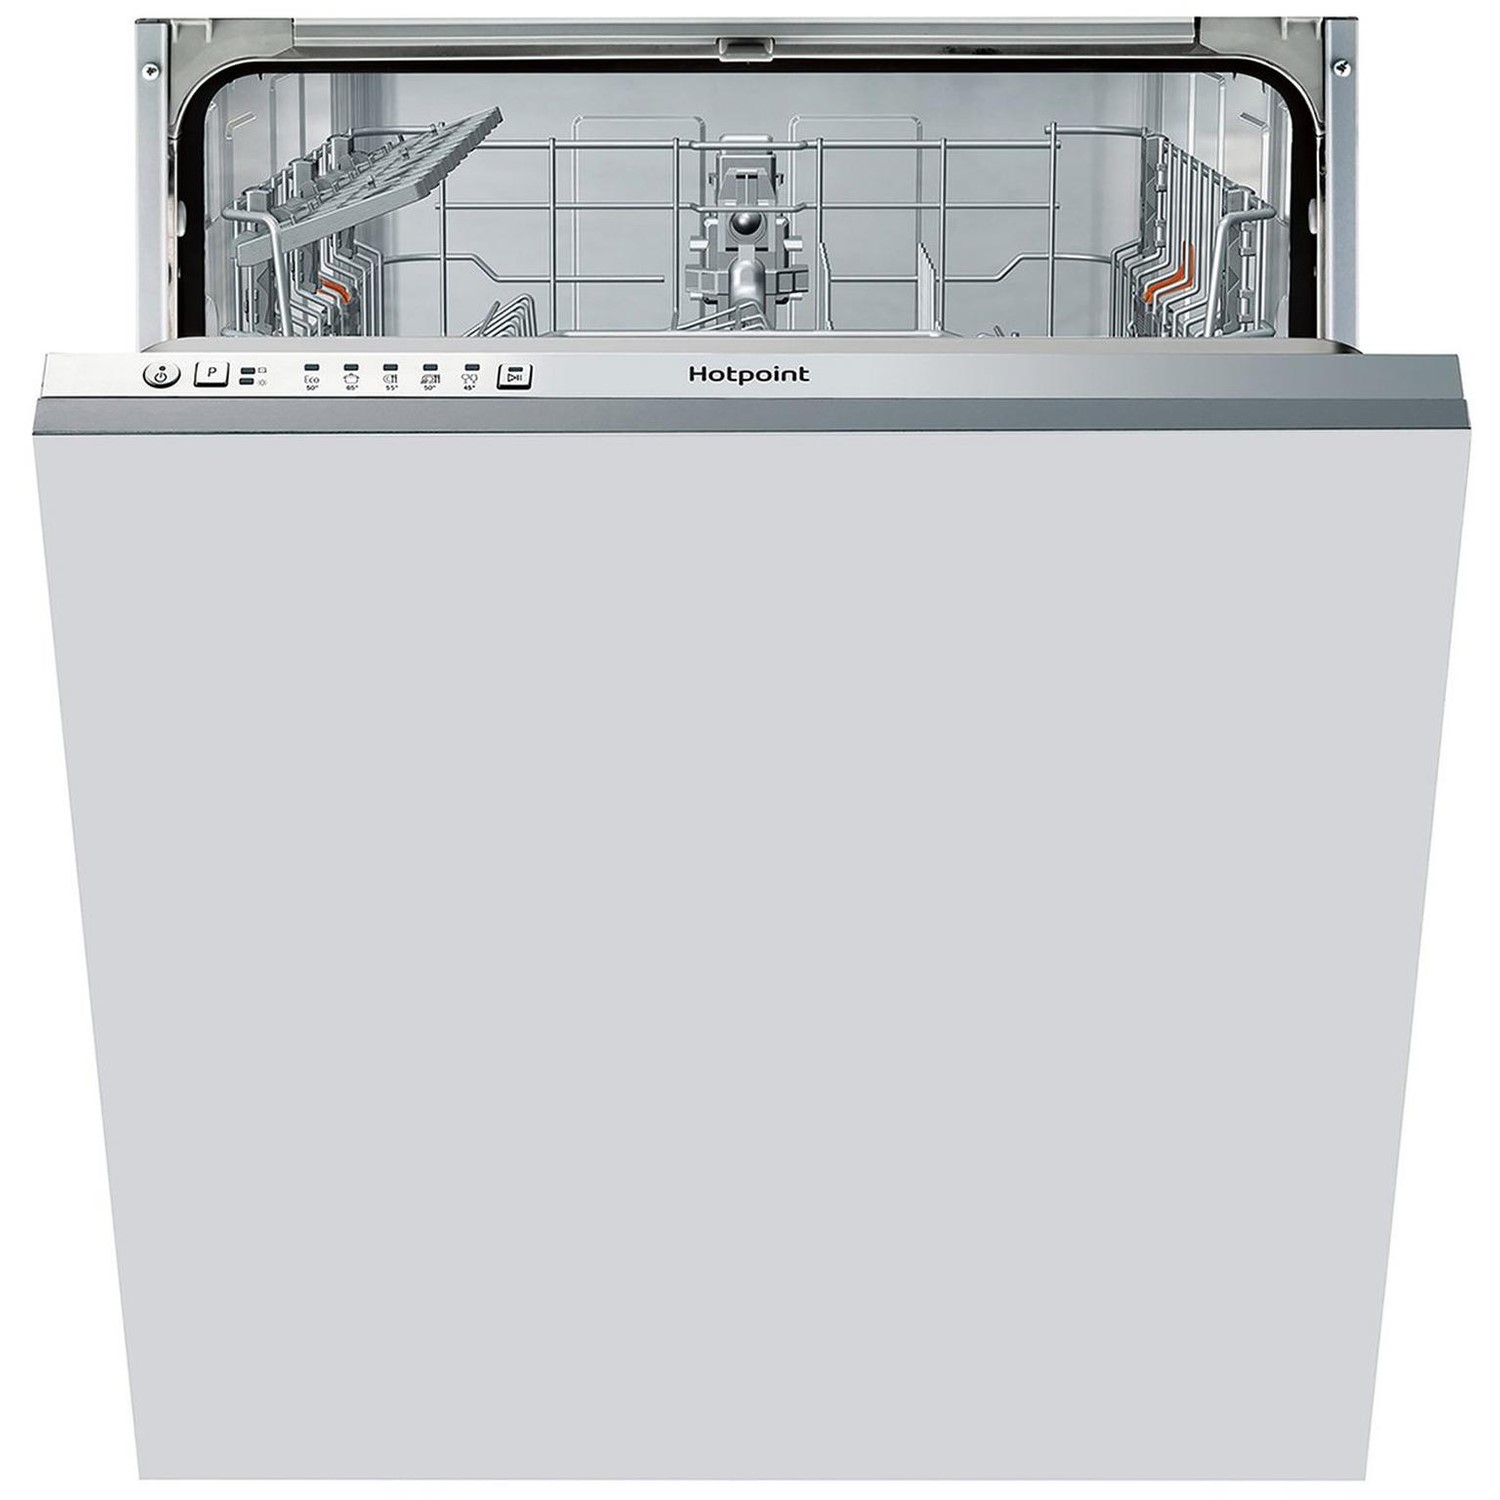 Refurbished Hotpoint HIE2B19UK 13 Place Fully Integrated Dishwasher